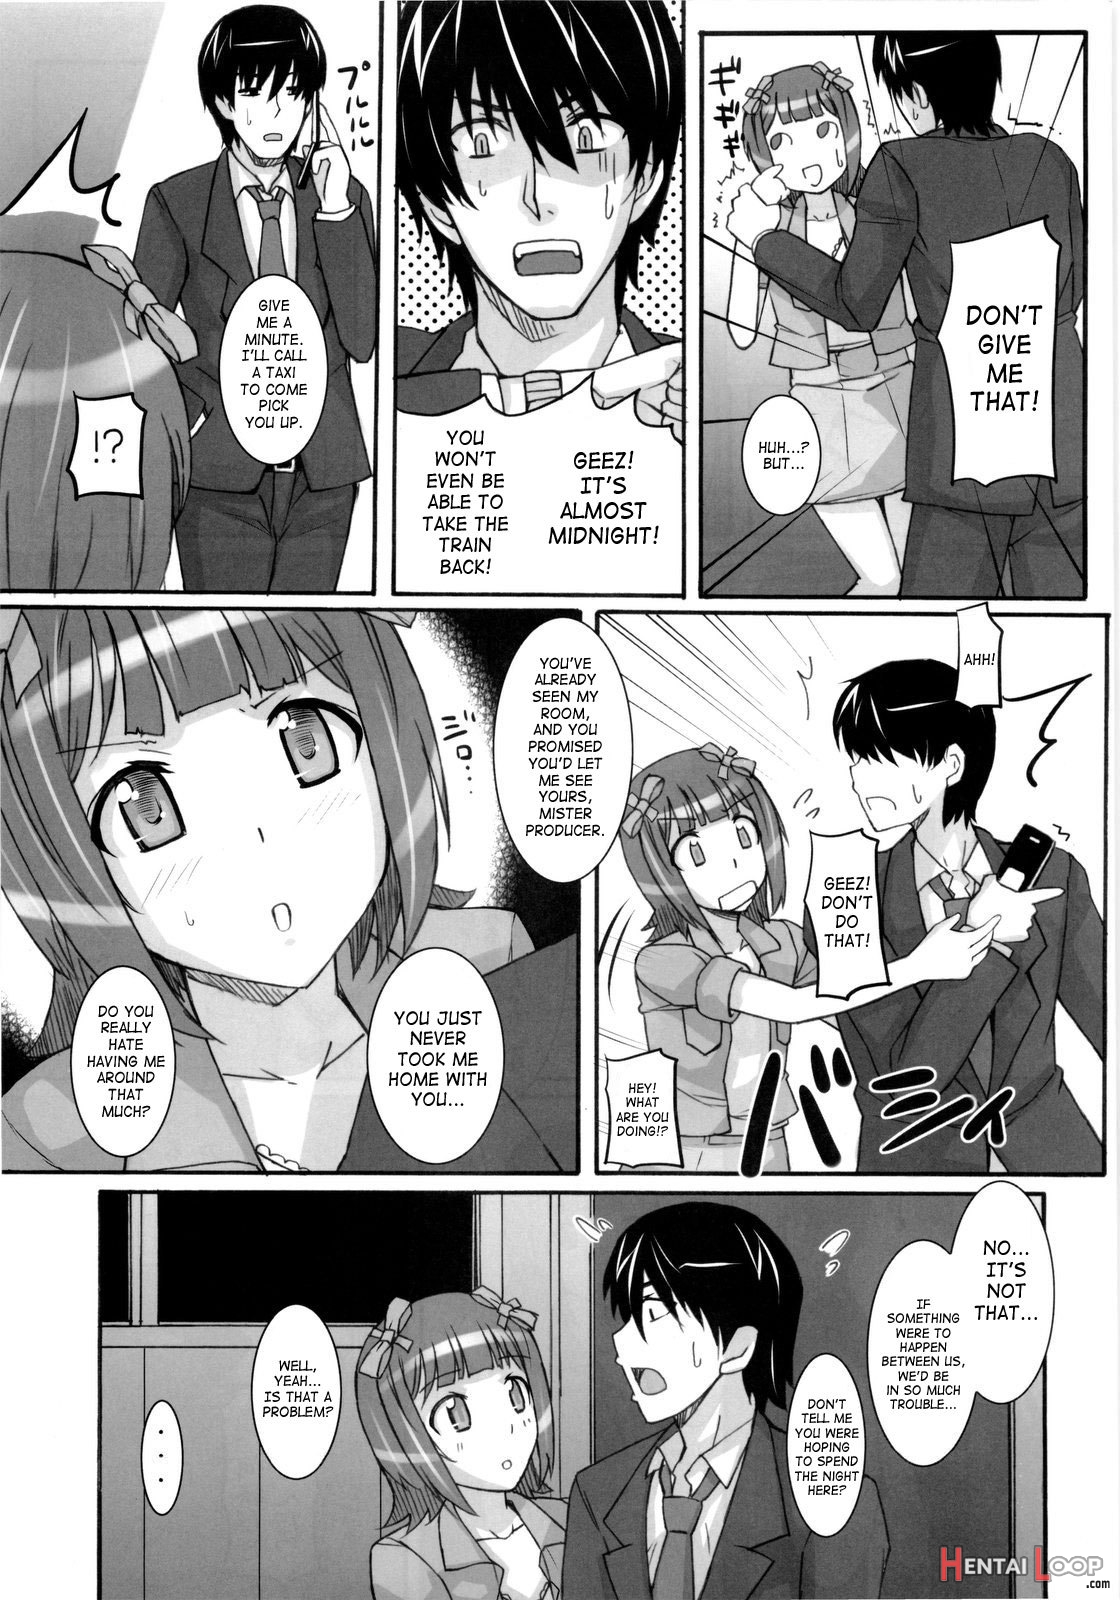 Ao Haruka page 6